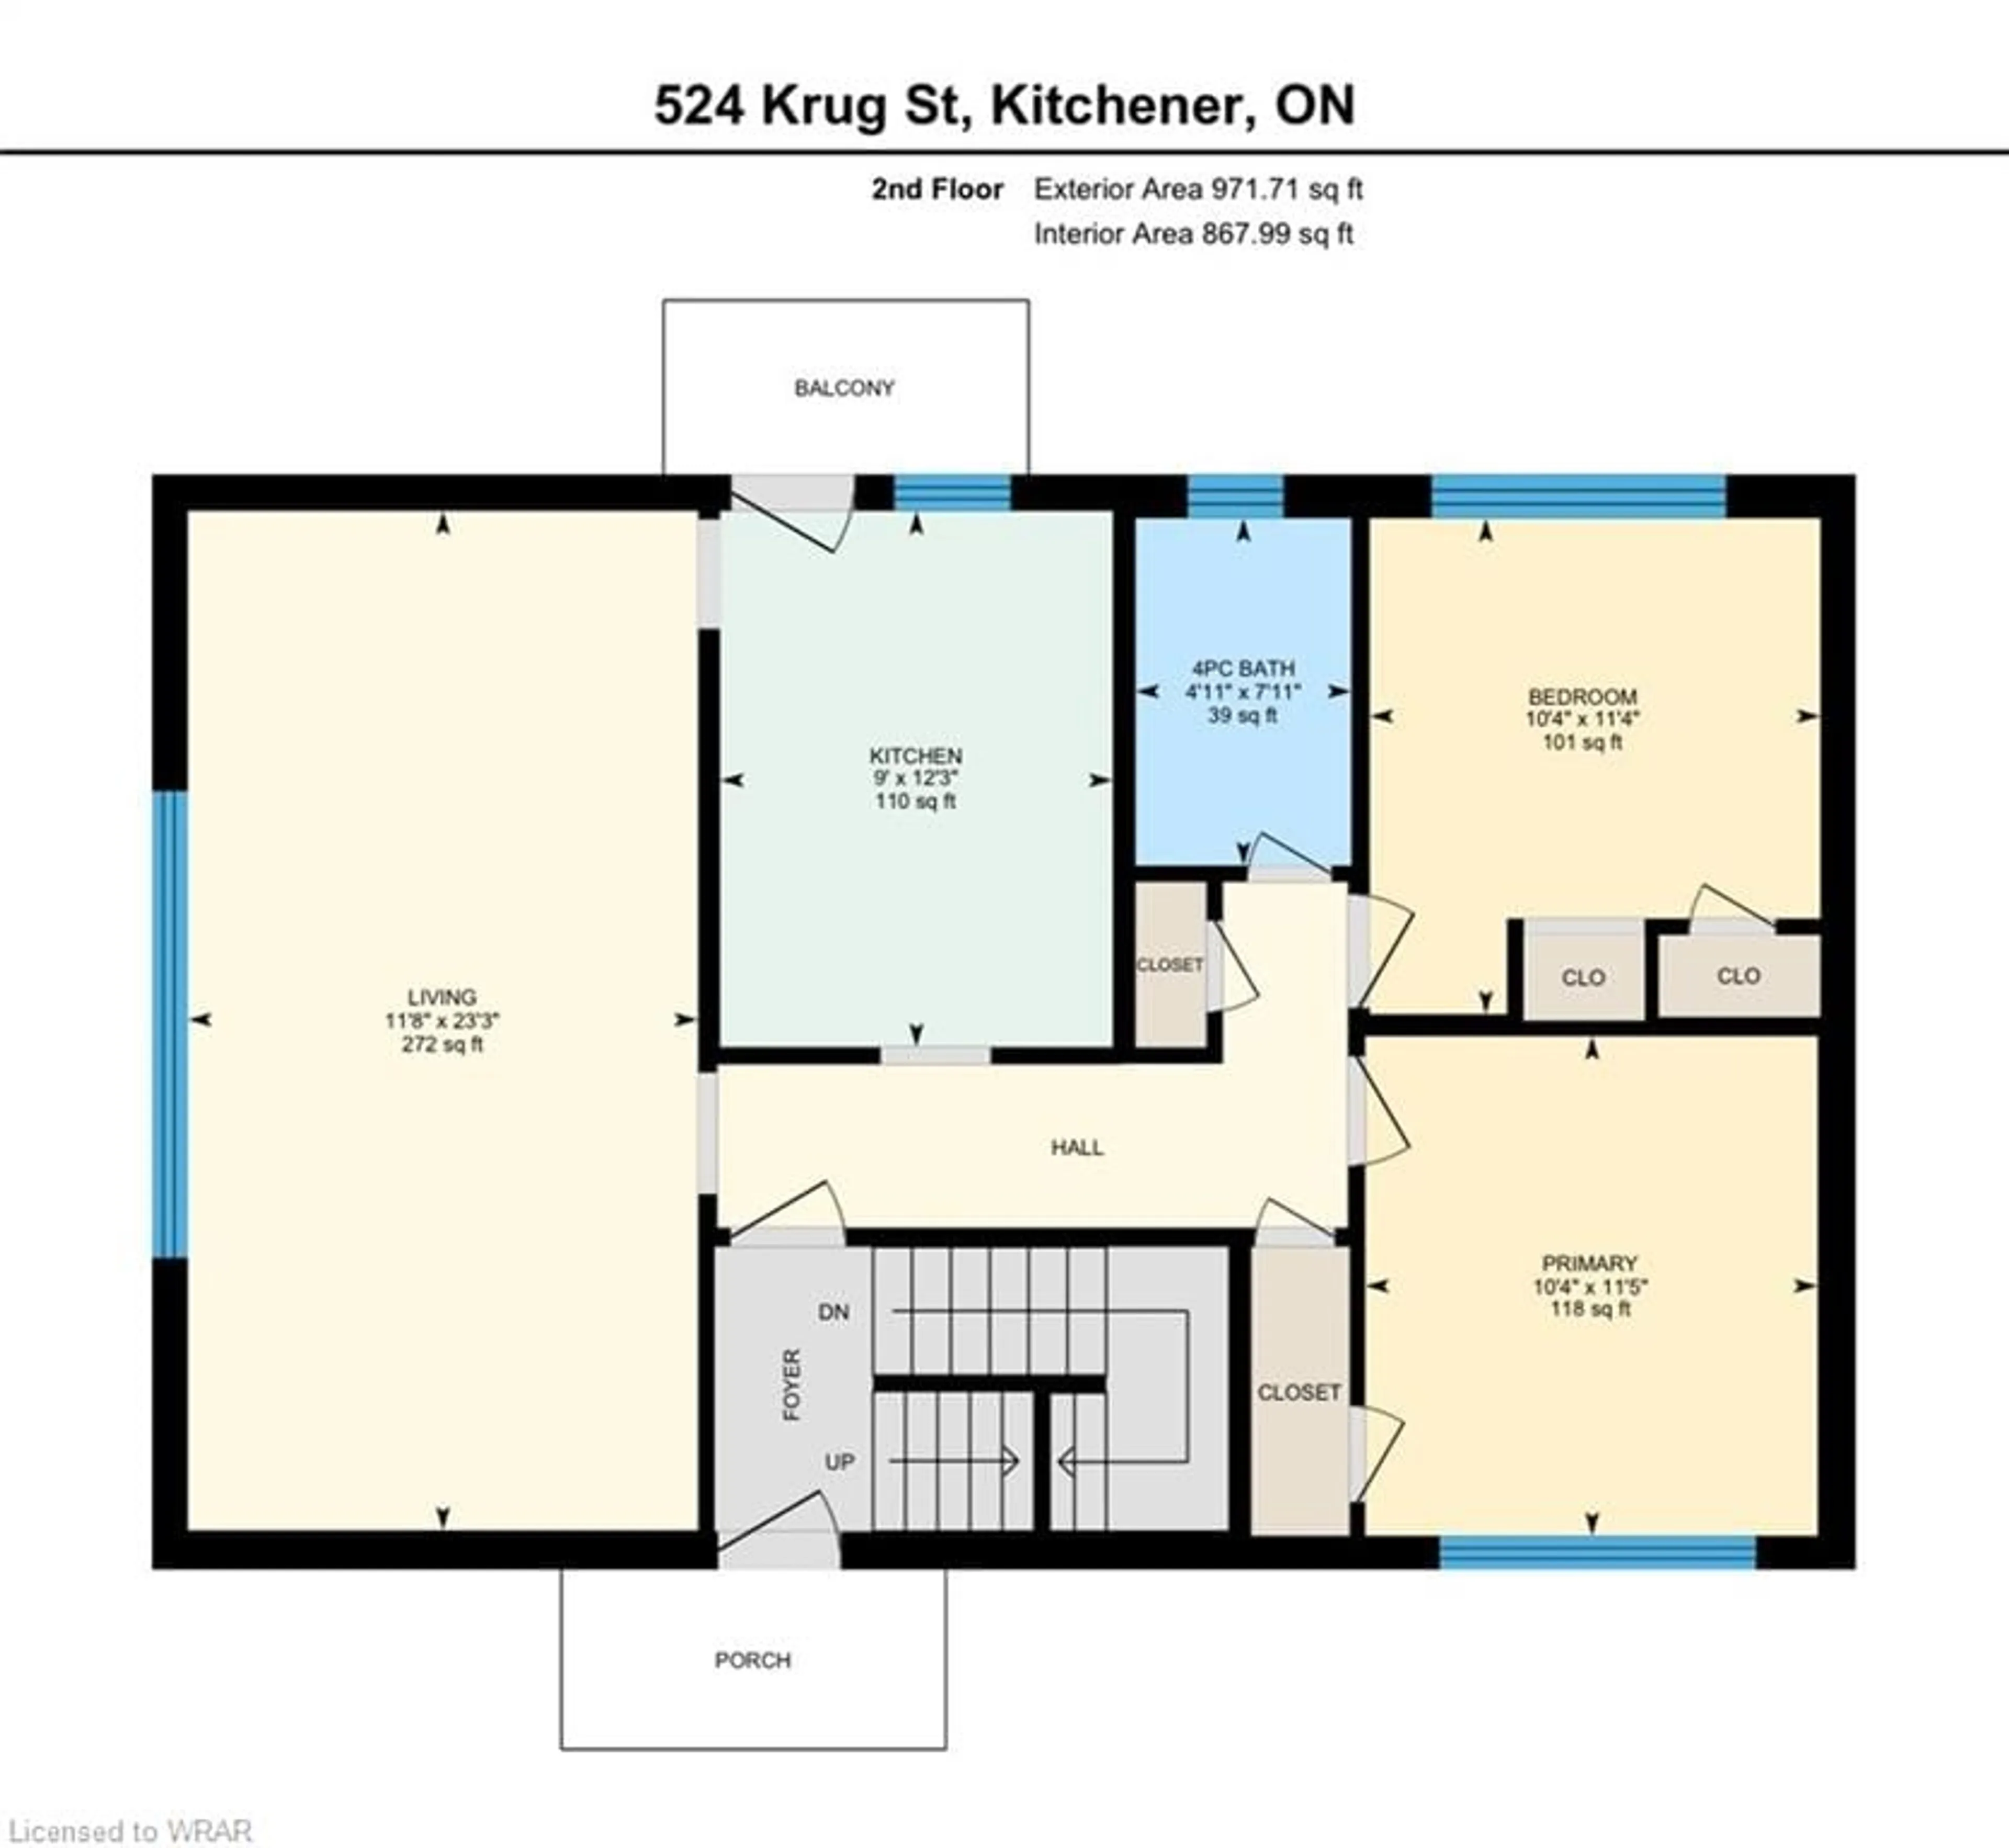 Floor plan for 524 Krug St, Kitchener Ontario N2B 1L6